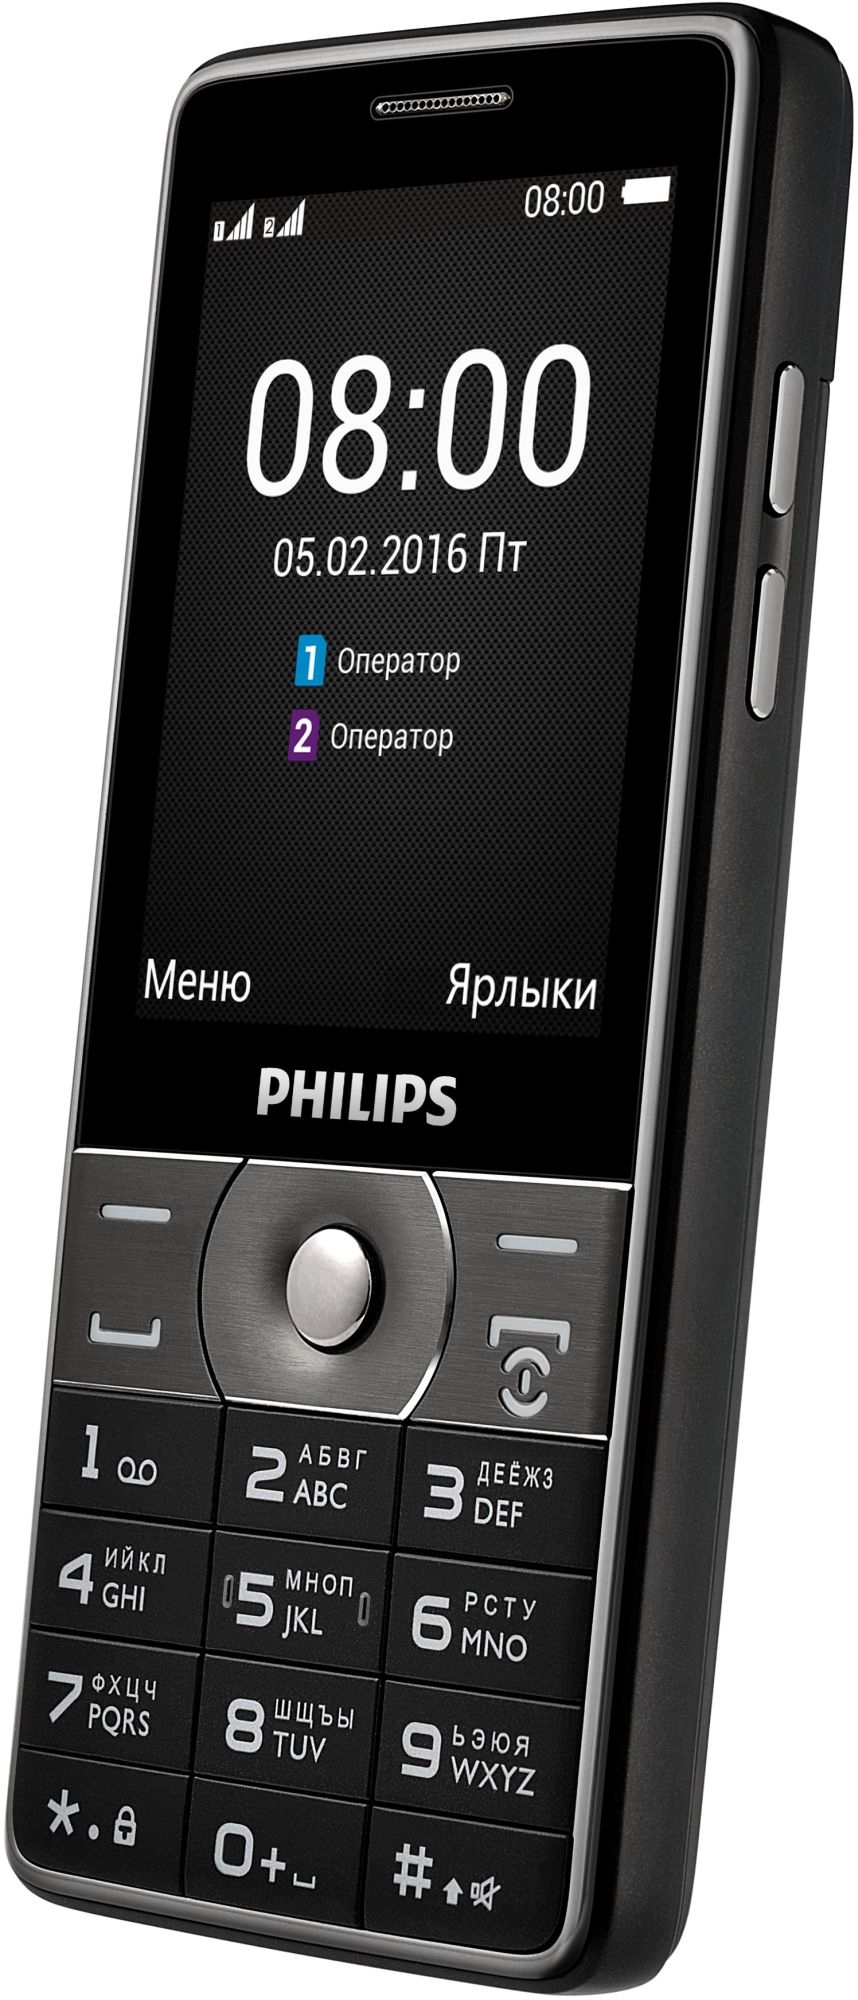 Обзор телефонов philips